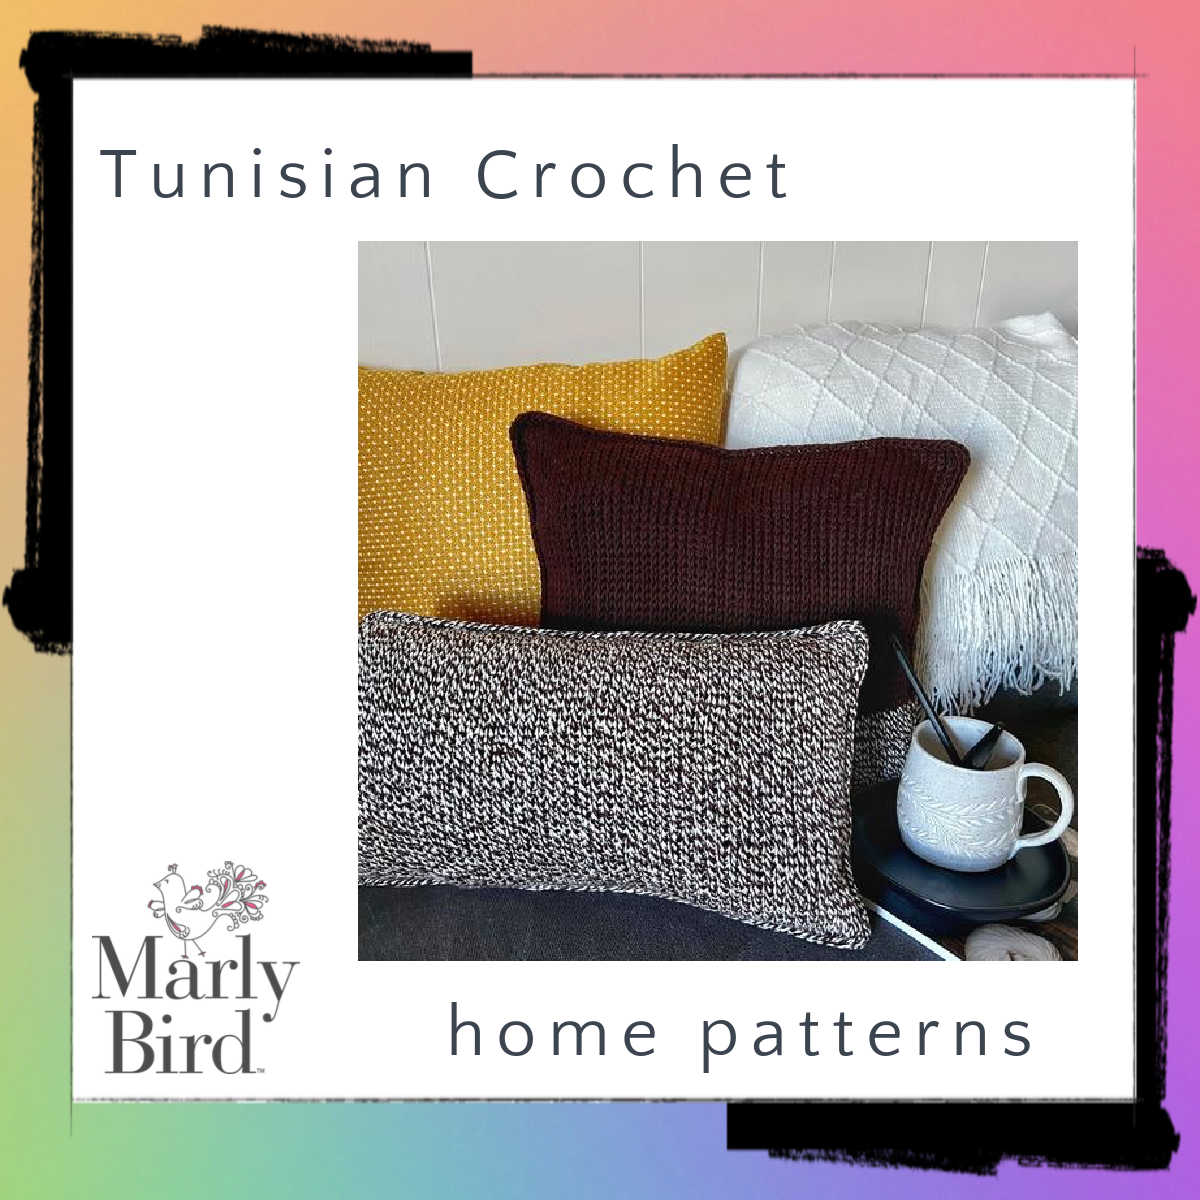 Tunisian crochet home patterns - Marly Bird